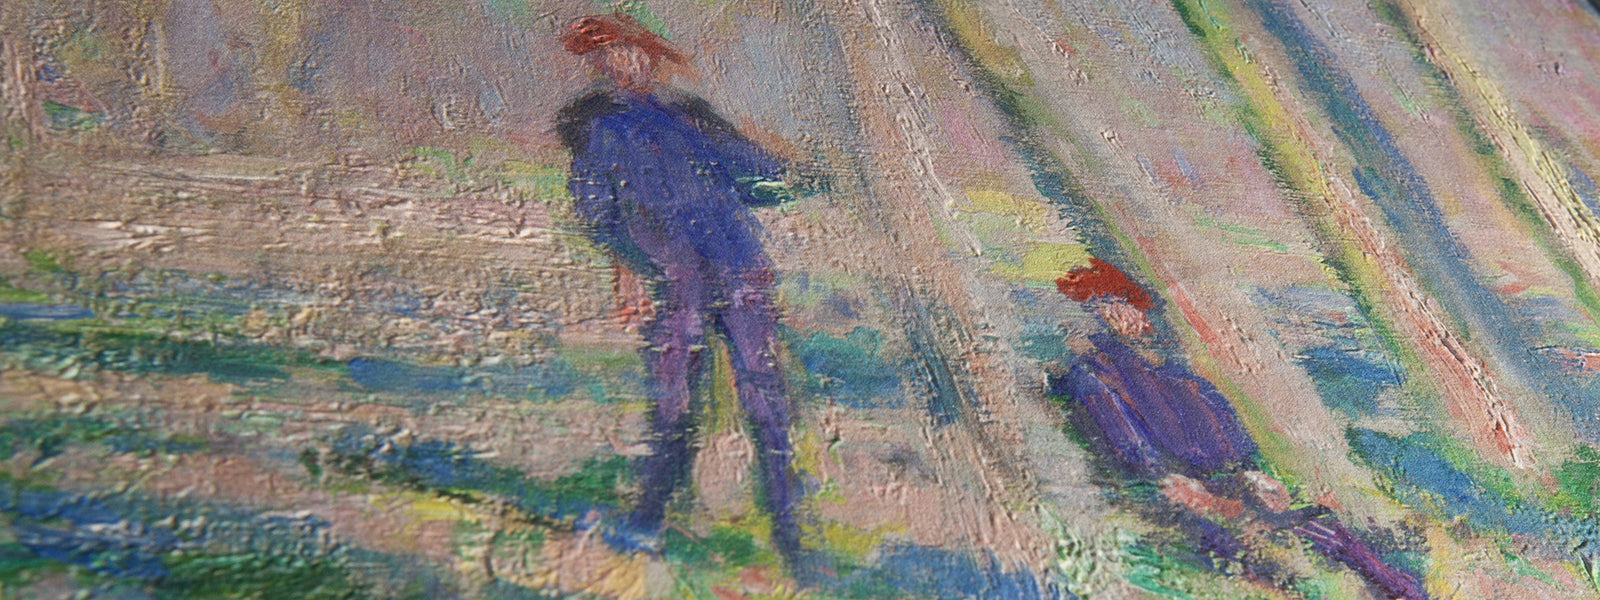 Monet Painting Close Up